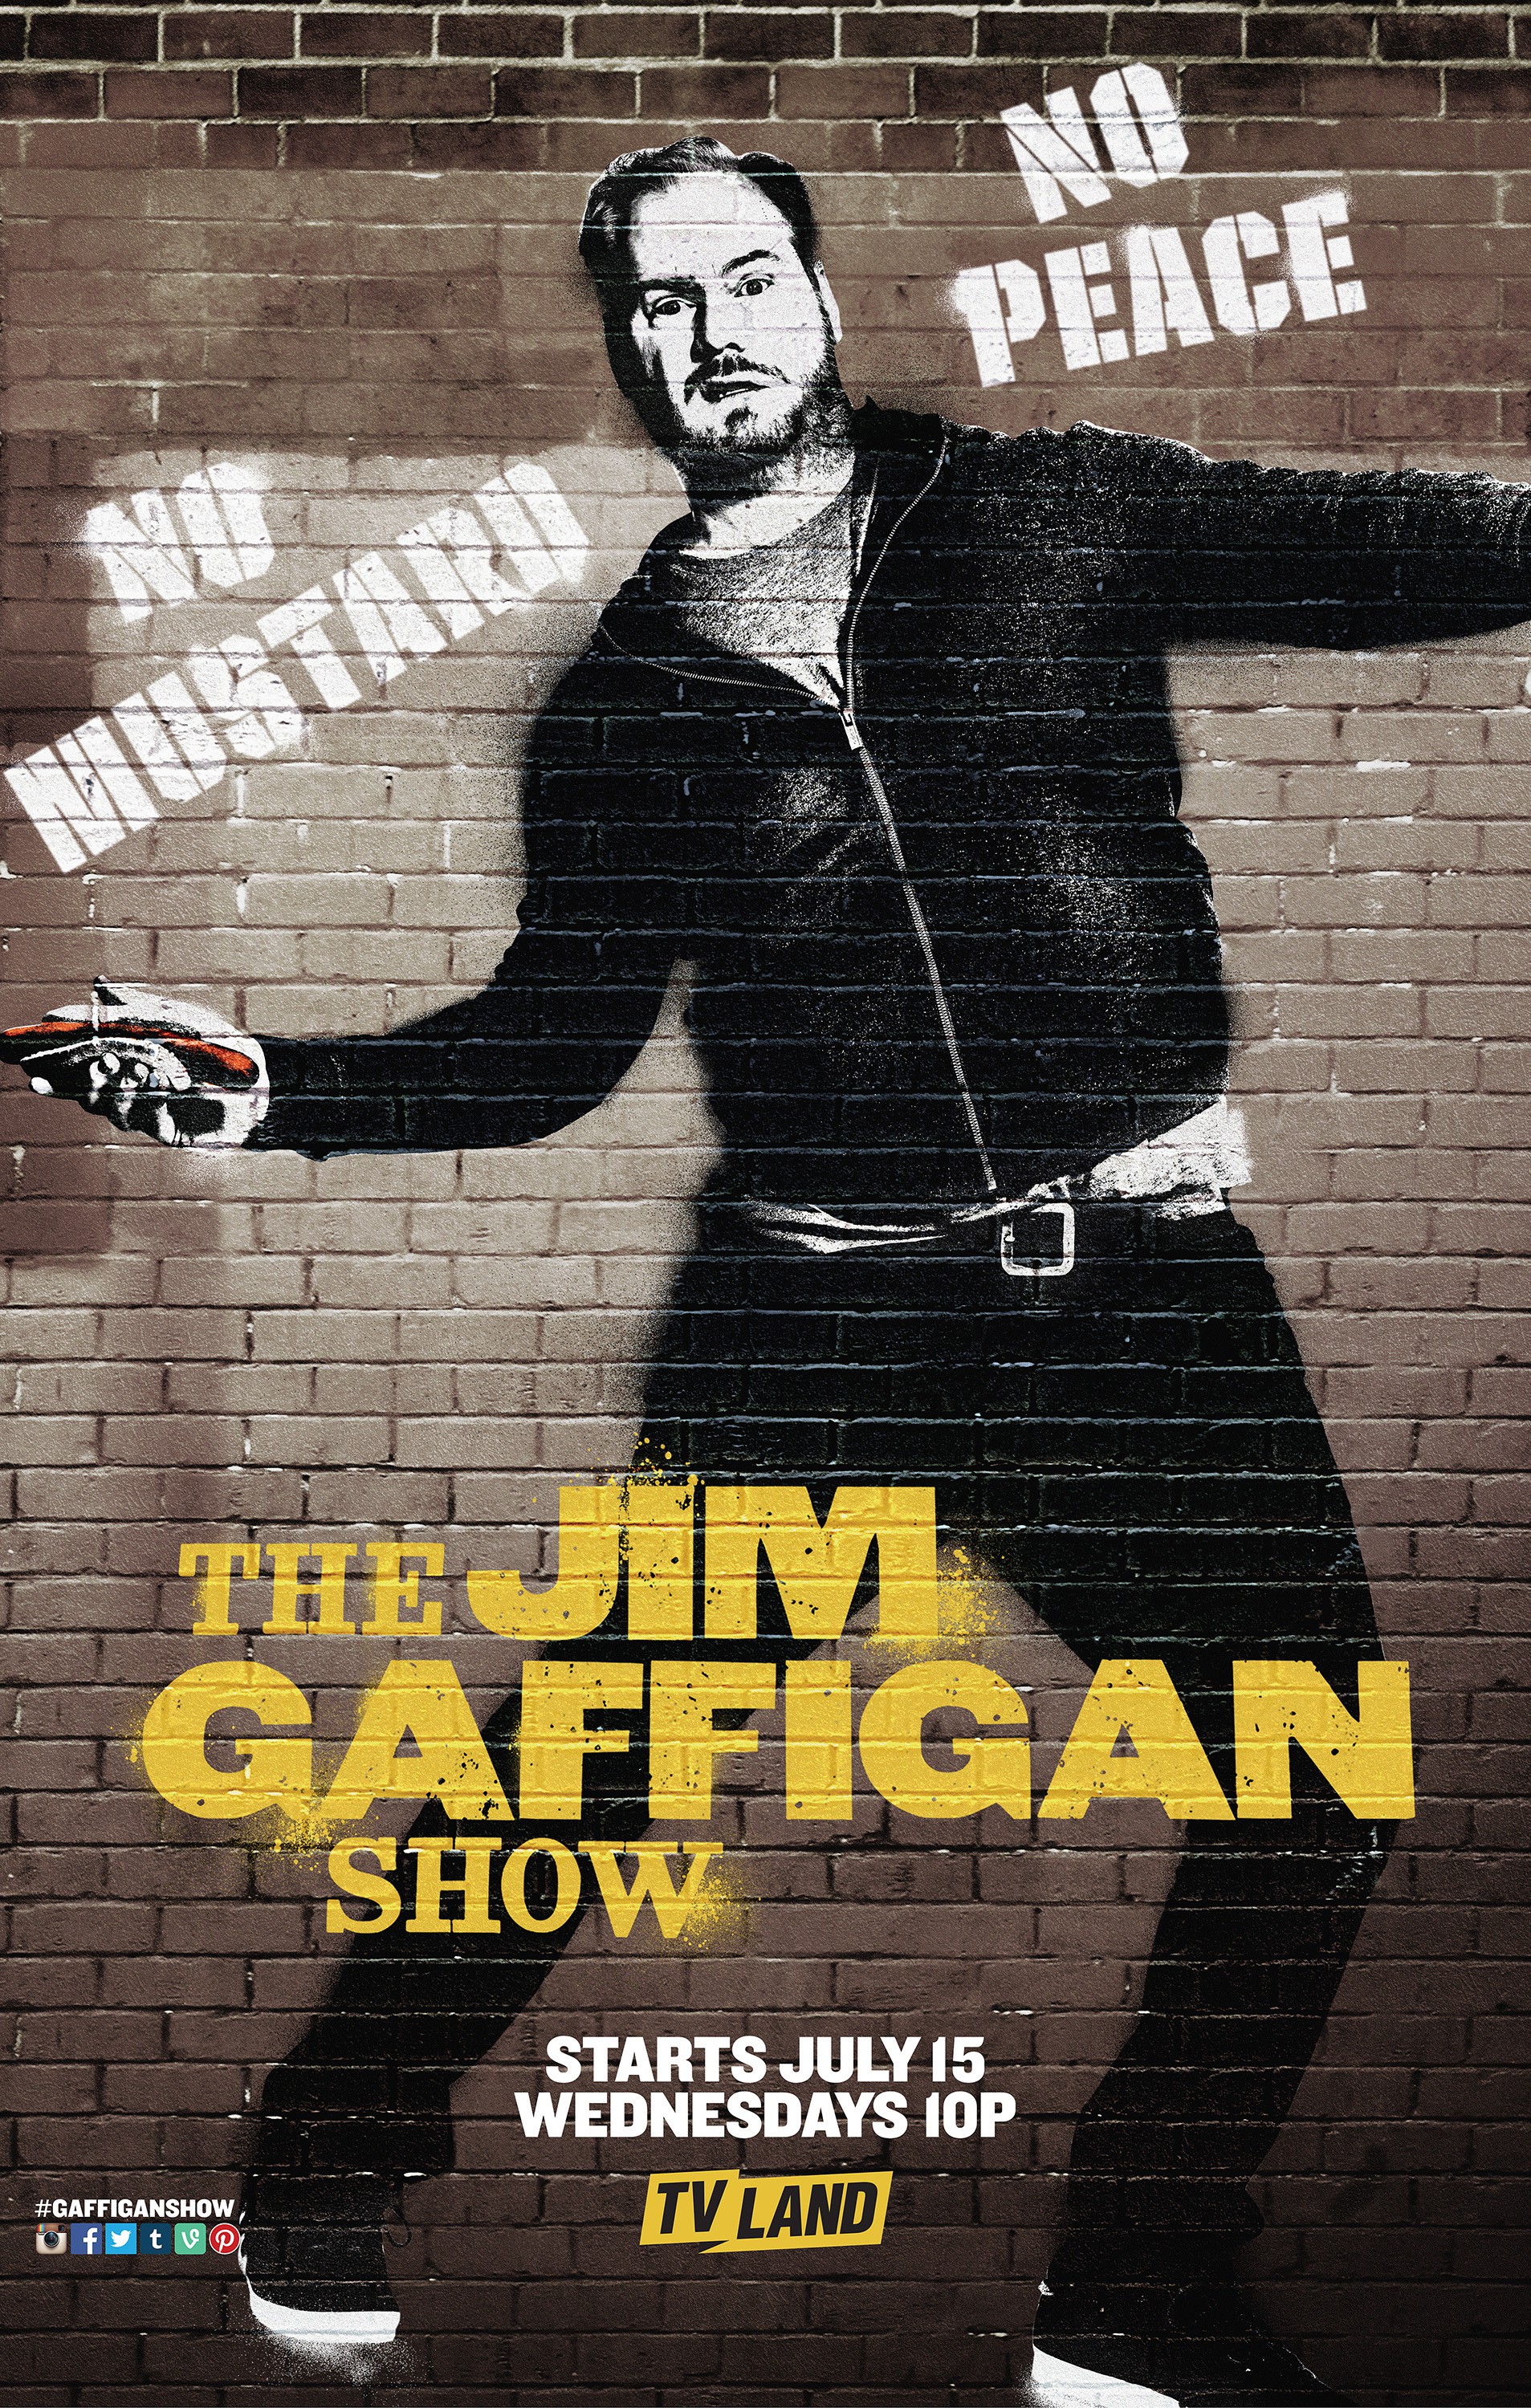 Mega Sized TV Poster Image for The Jim Gaffigan Show (#2 of 7)